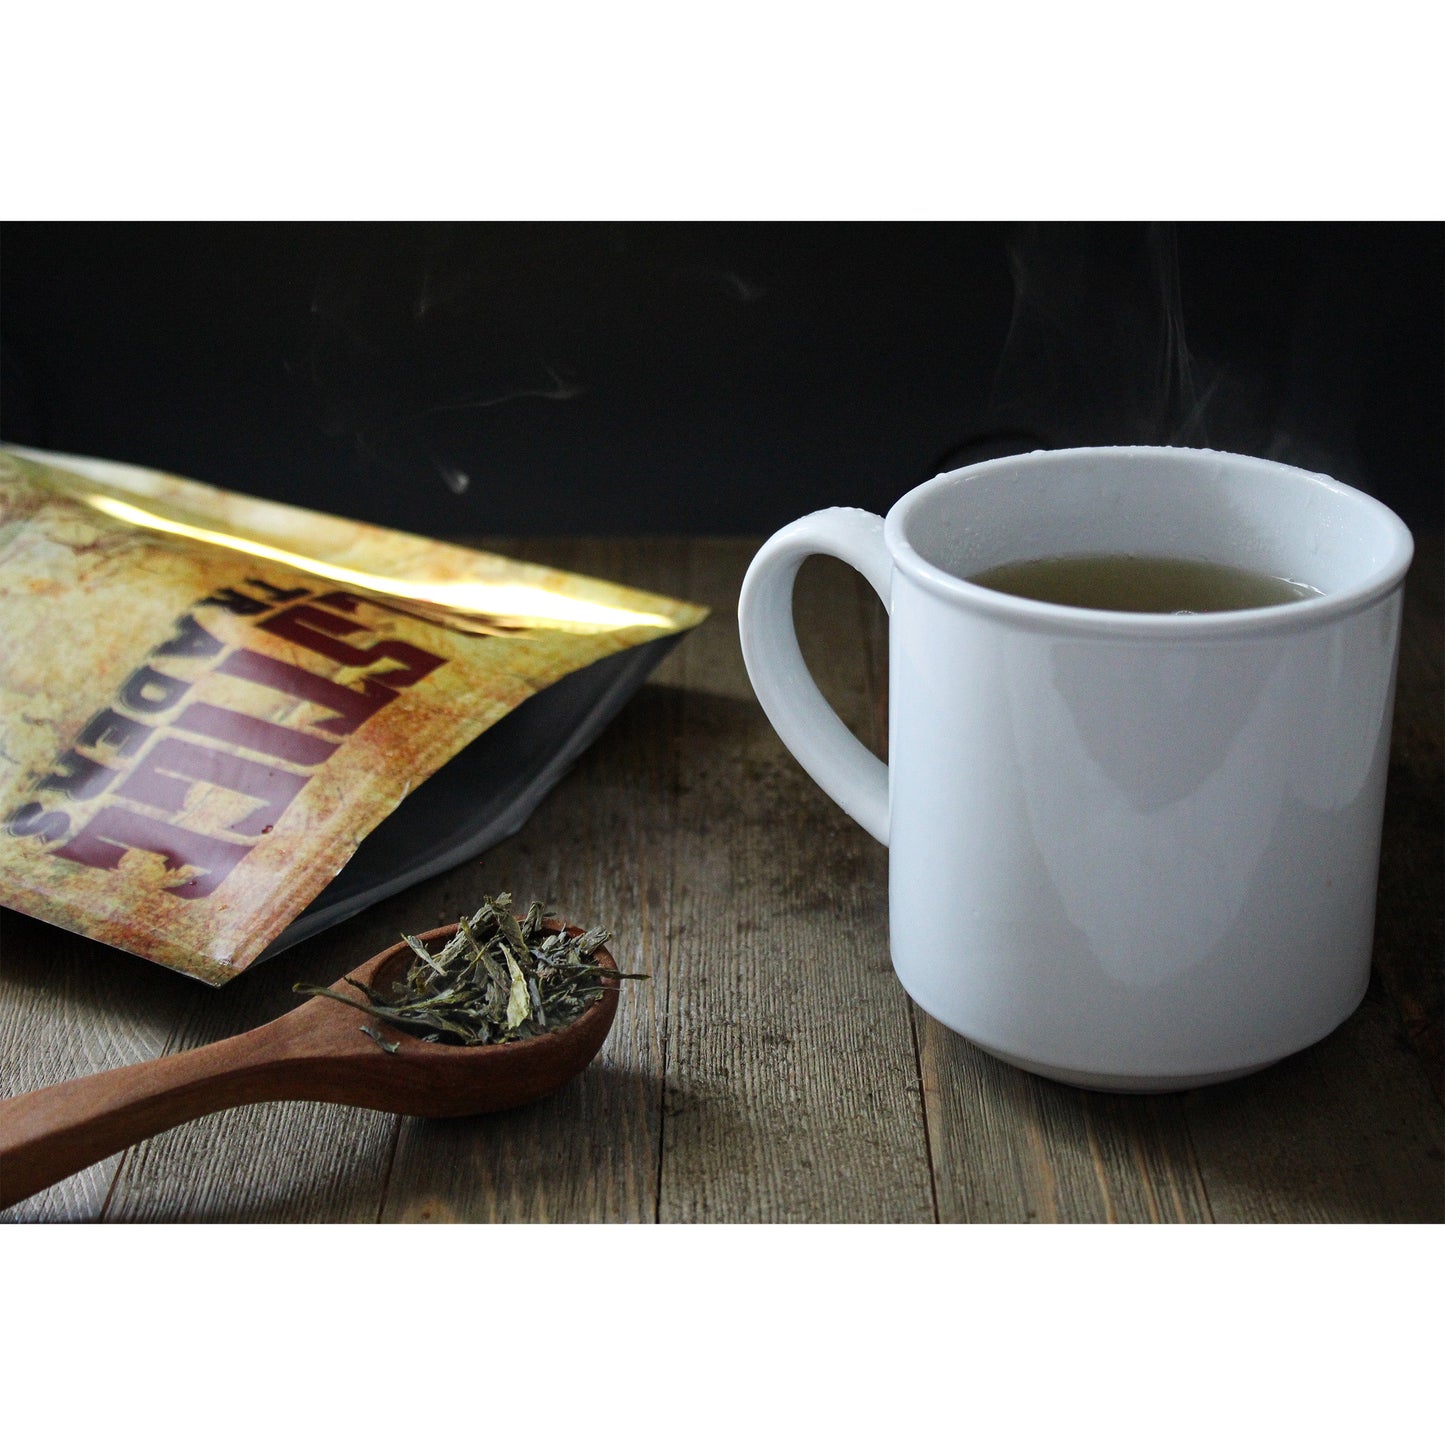 Kombucha Loose Leaf Tea Super Green Blend (8oz)